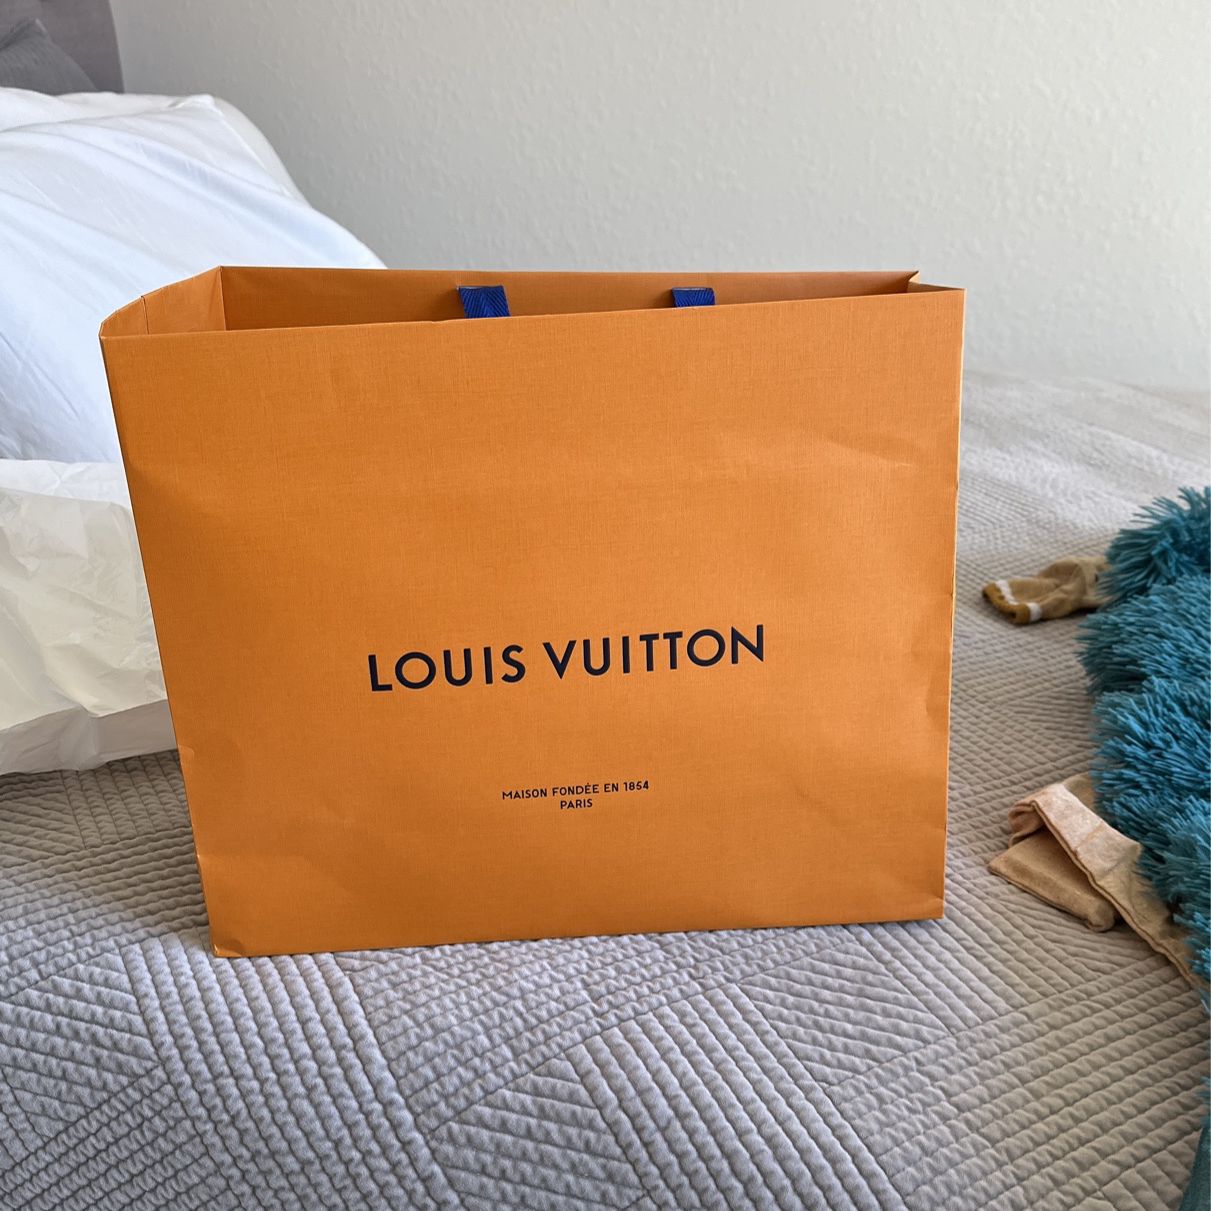 Louis Vuitton Laptop Bag for Sale in Halndle Bch, FL - OfferUp